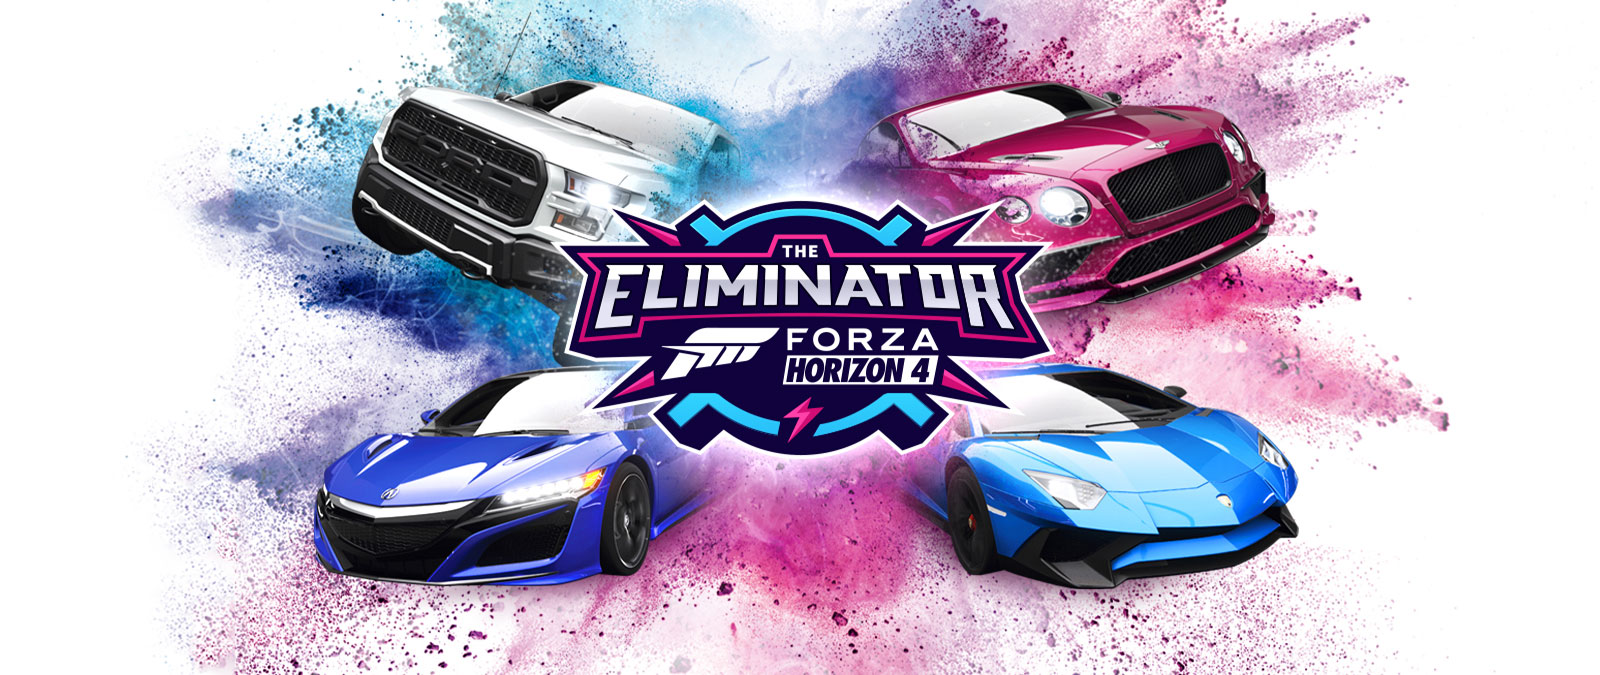 The Eliminator，Forza Horizon 4 標誌，四輛車子周圍有著藍色和粉紅色粉末